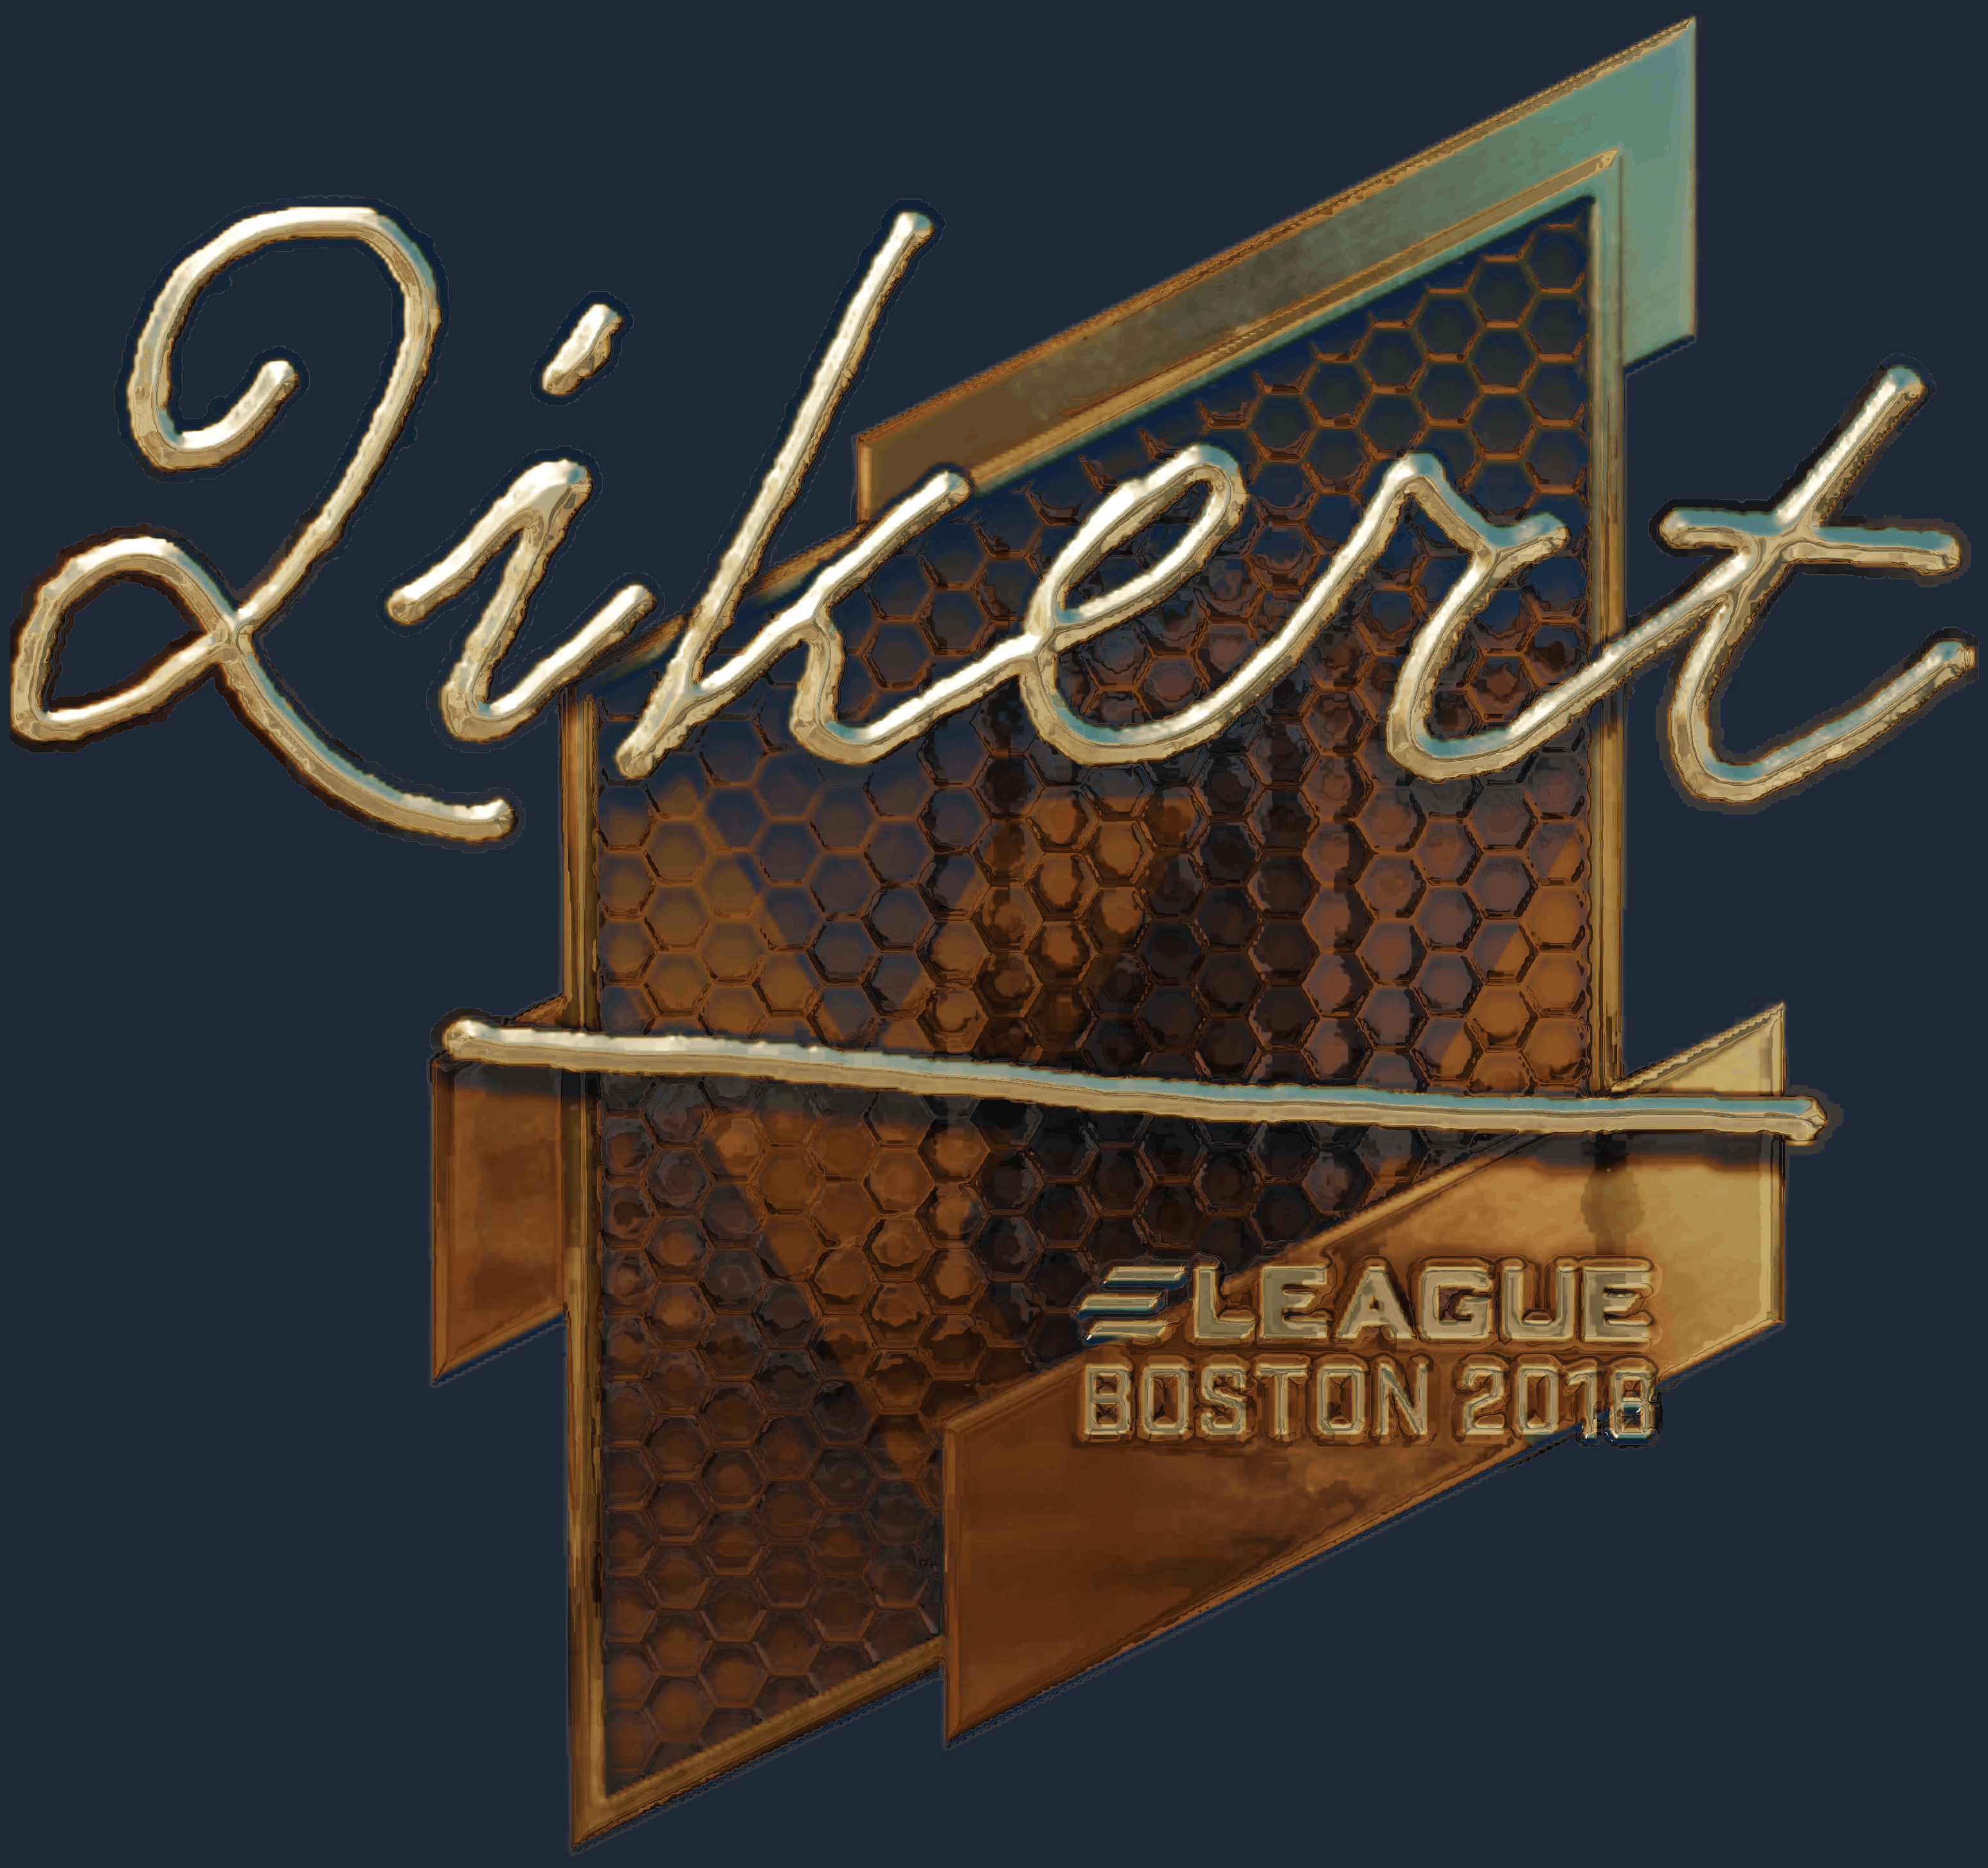 Sticker | qikert (Gold) | Boston 2018 Screenshot